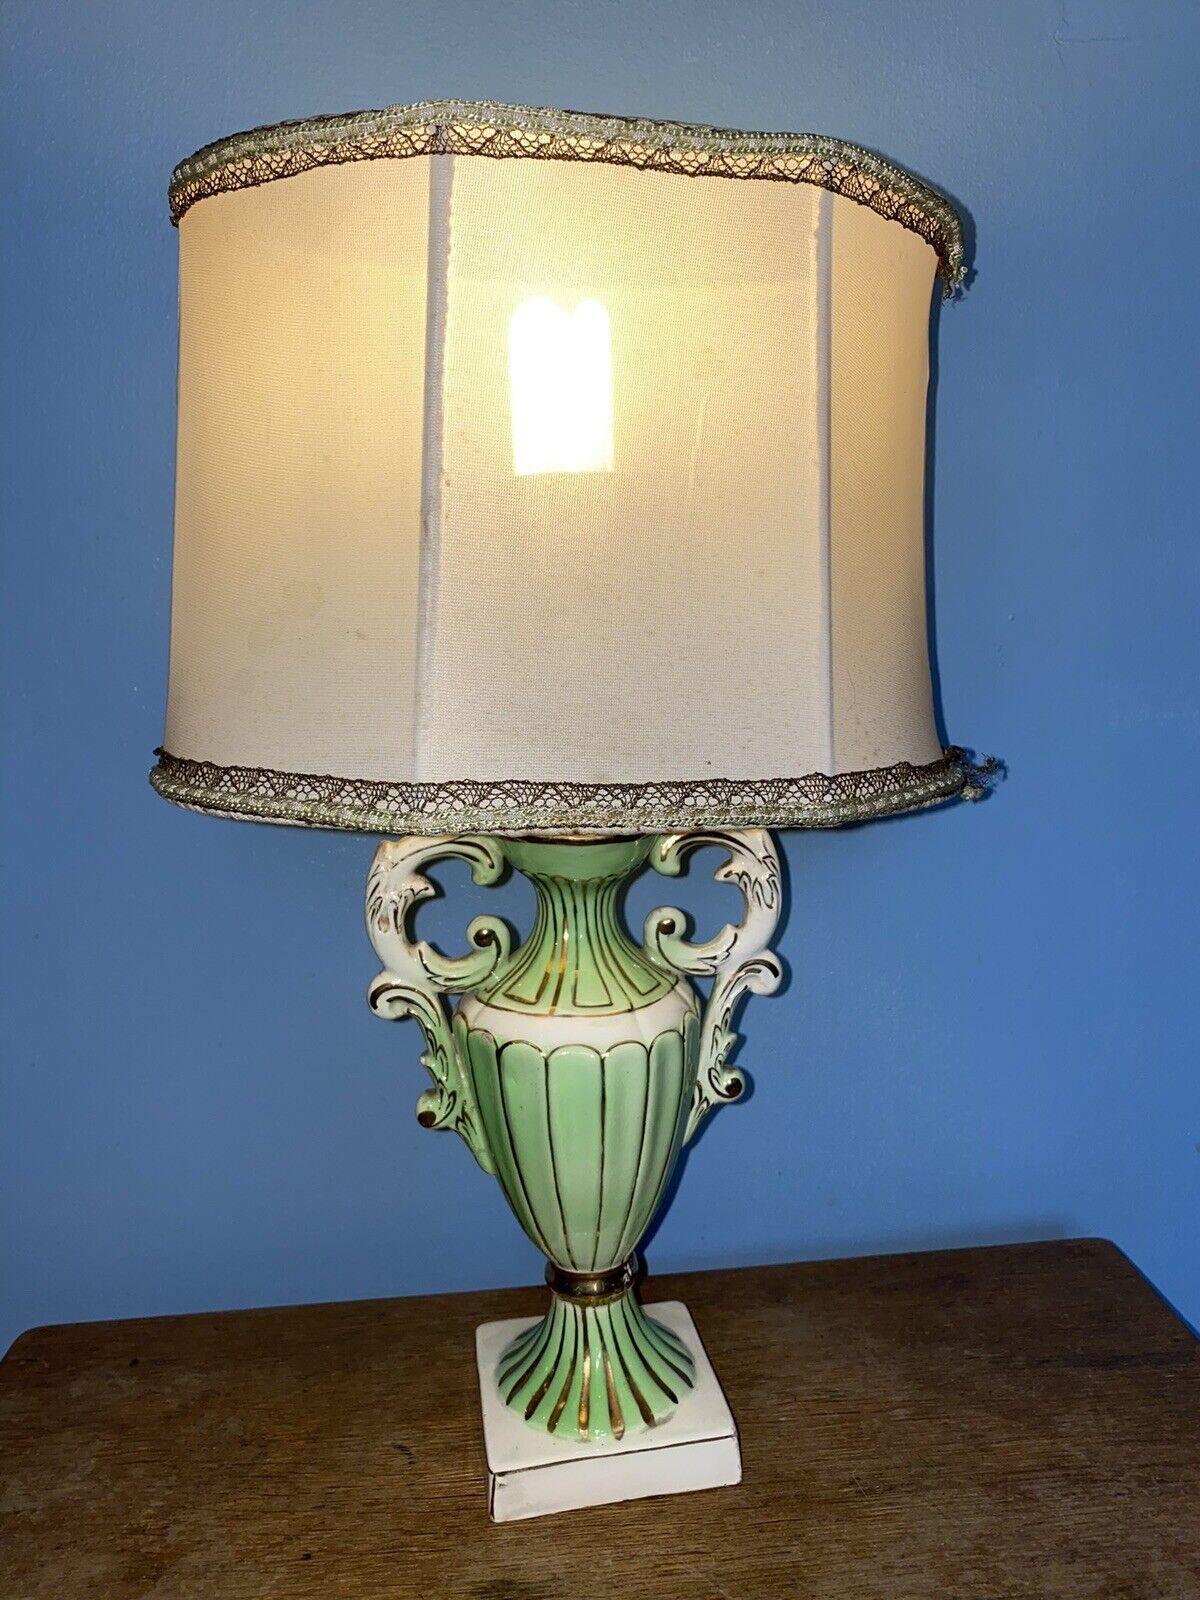 1930s or 40s ornate lamp